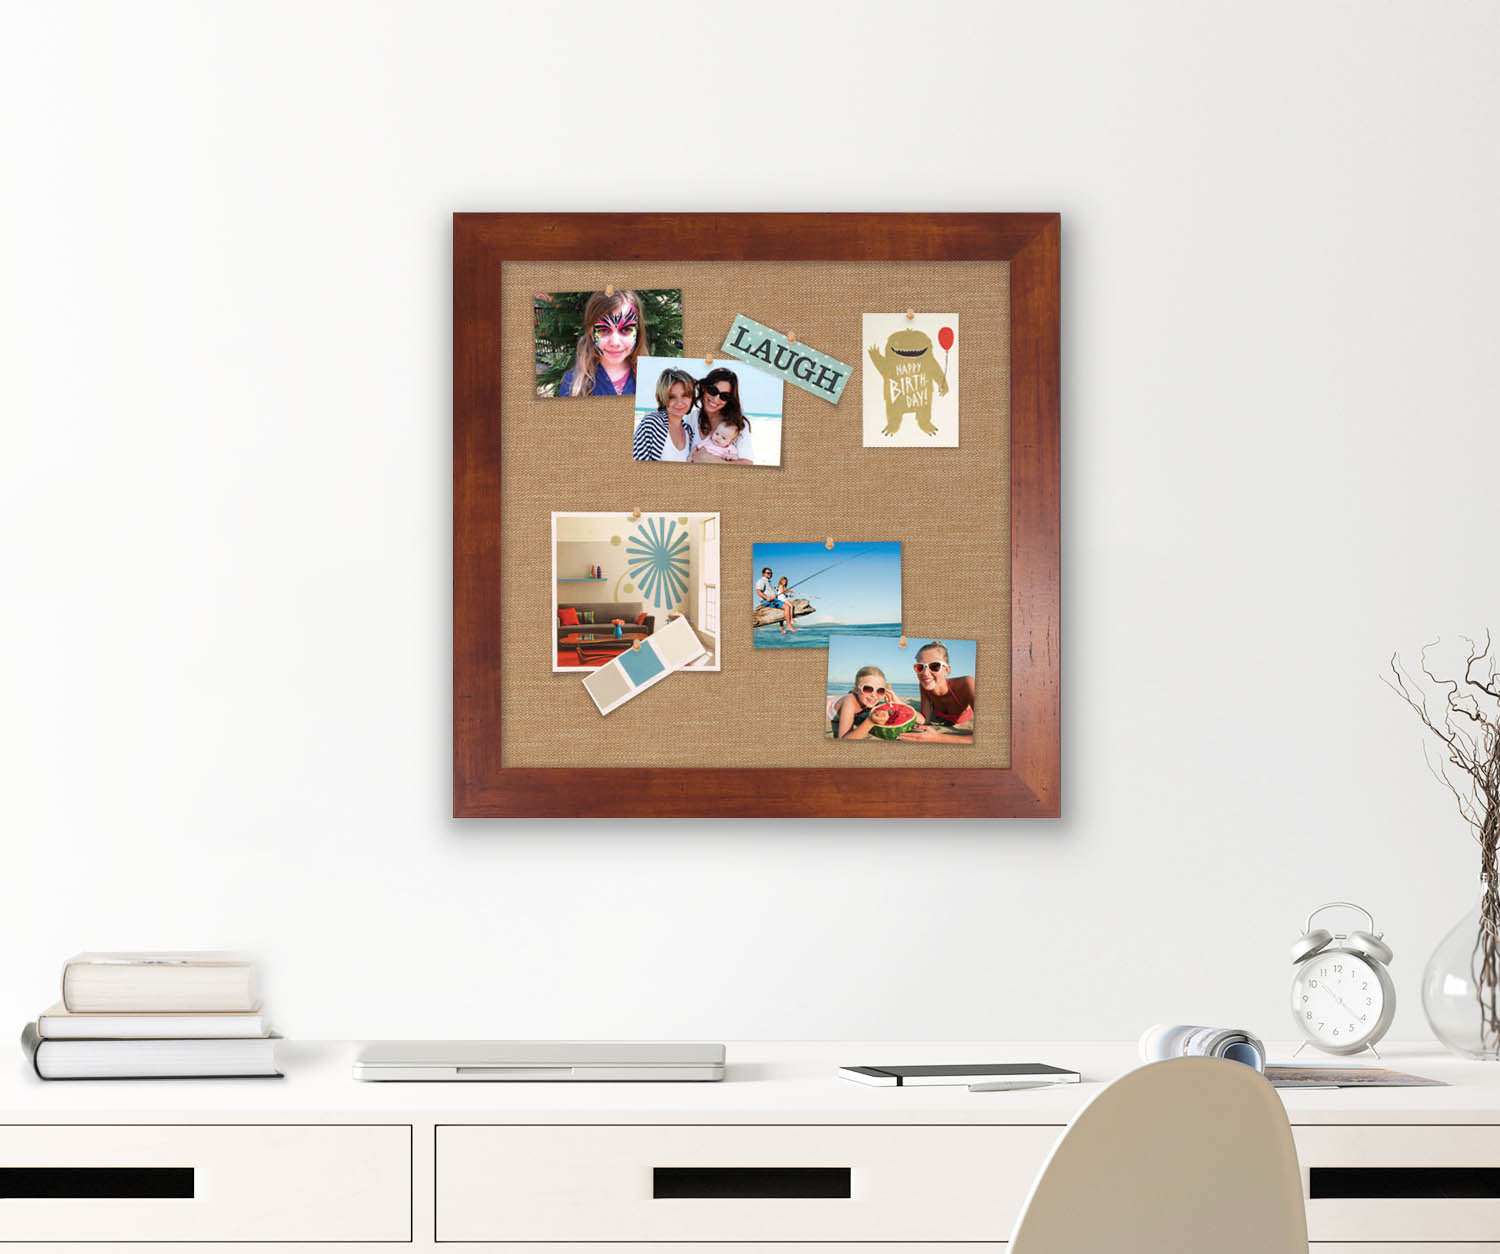 Natural Wood Frame Cork Bulletin Board Office Supplier 20*30cm Home DecorativeST 